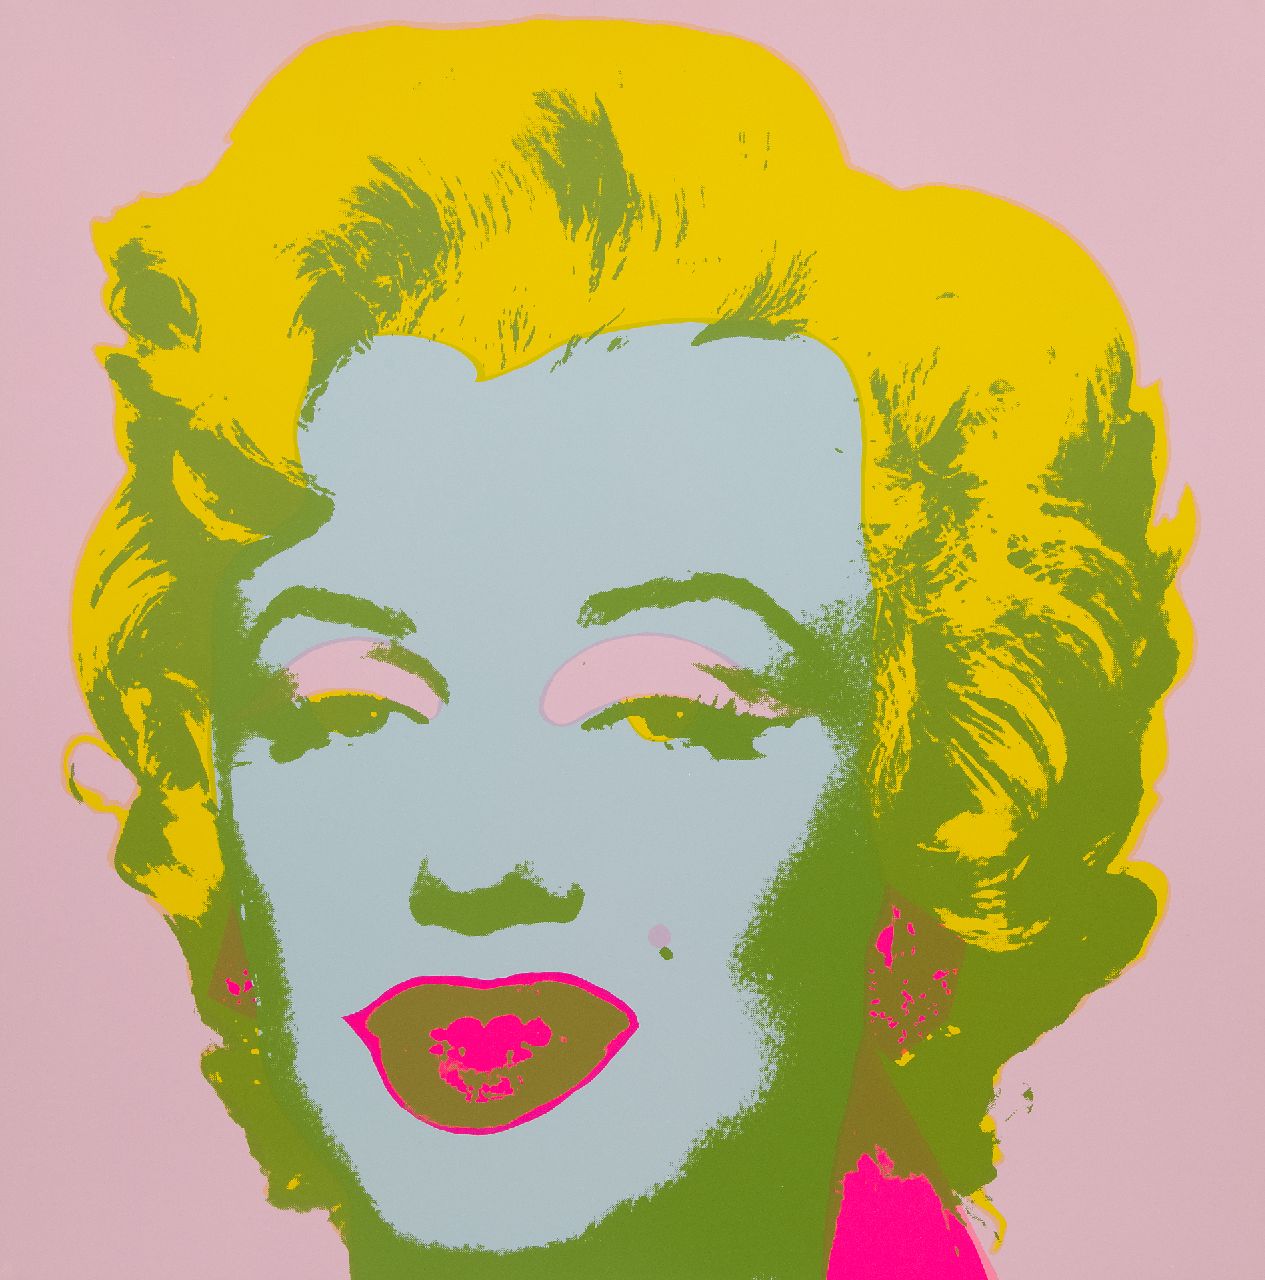 Naar Andy Warhol   | Naar Andy Warhol | Prints and Multiples offered for sale | Marilyn, screenprint on paper 91.0 x 91.0 cm, prijs zonder lijst